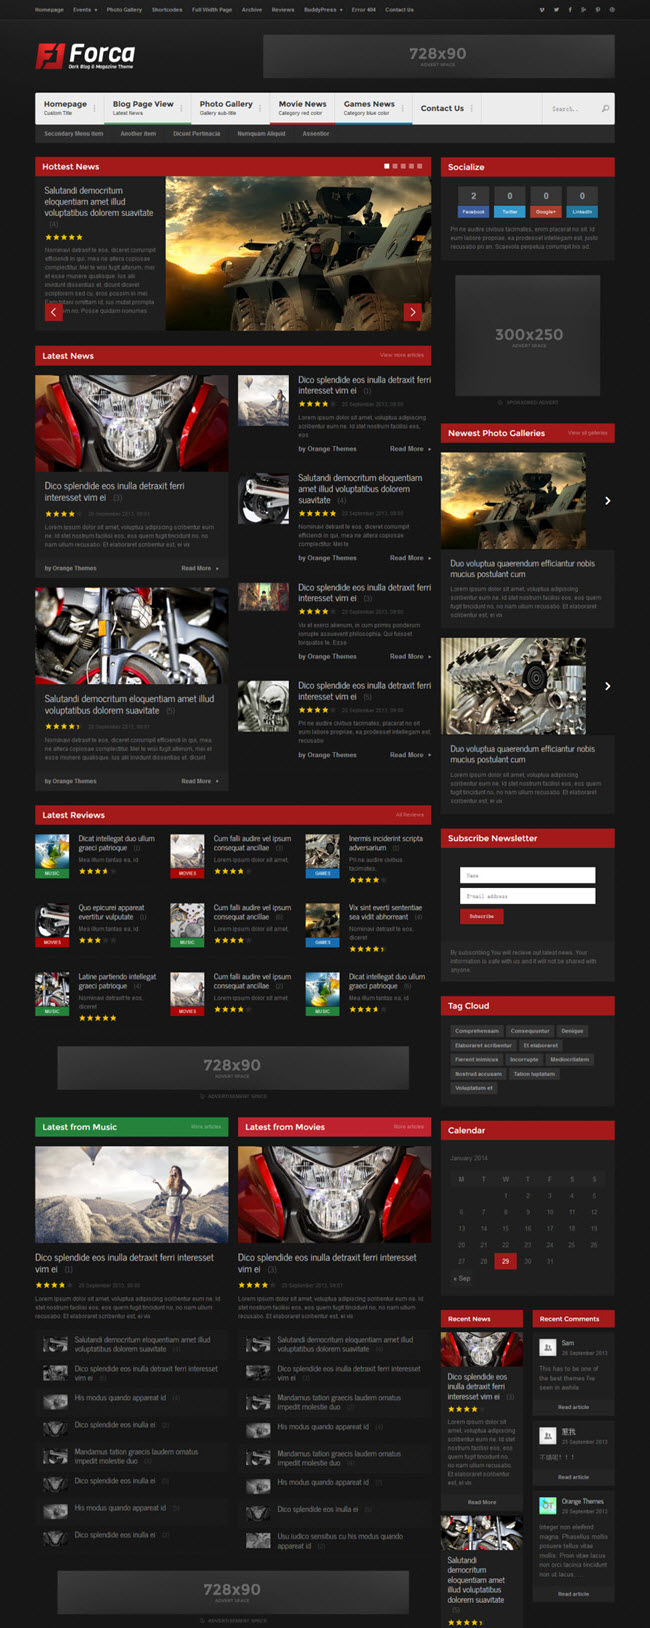 forca screenshot Best WordPress Gaming Themes